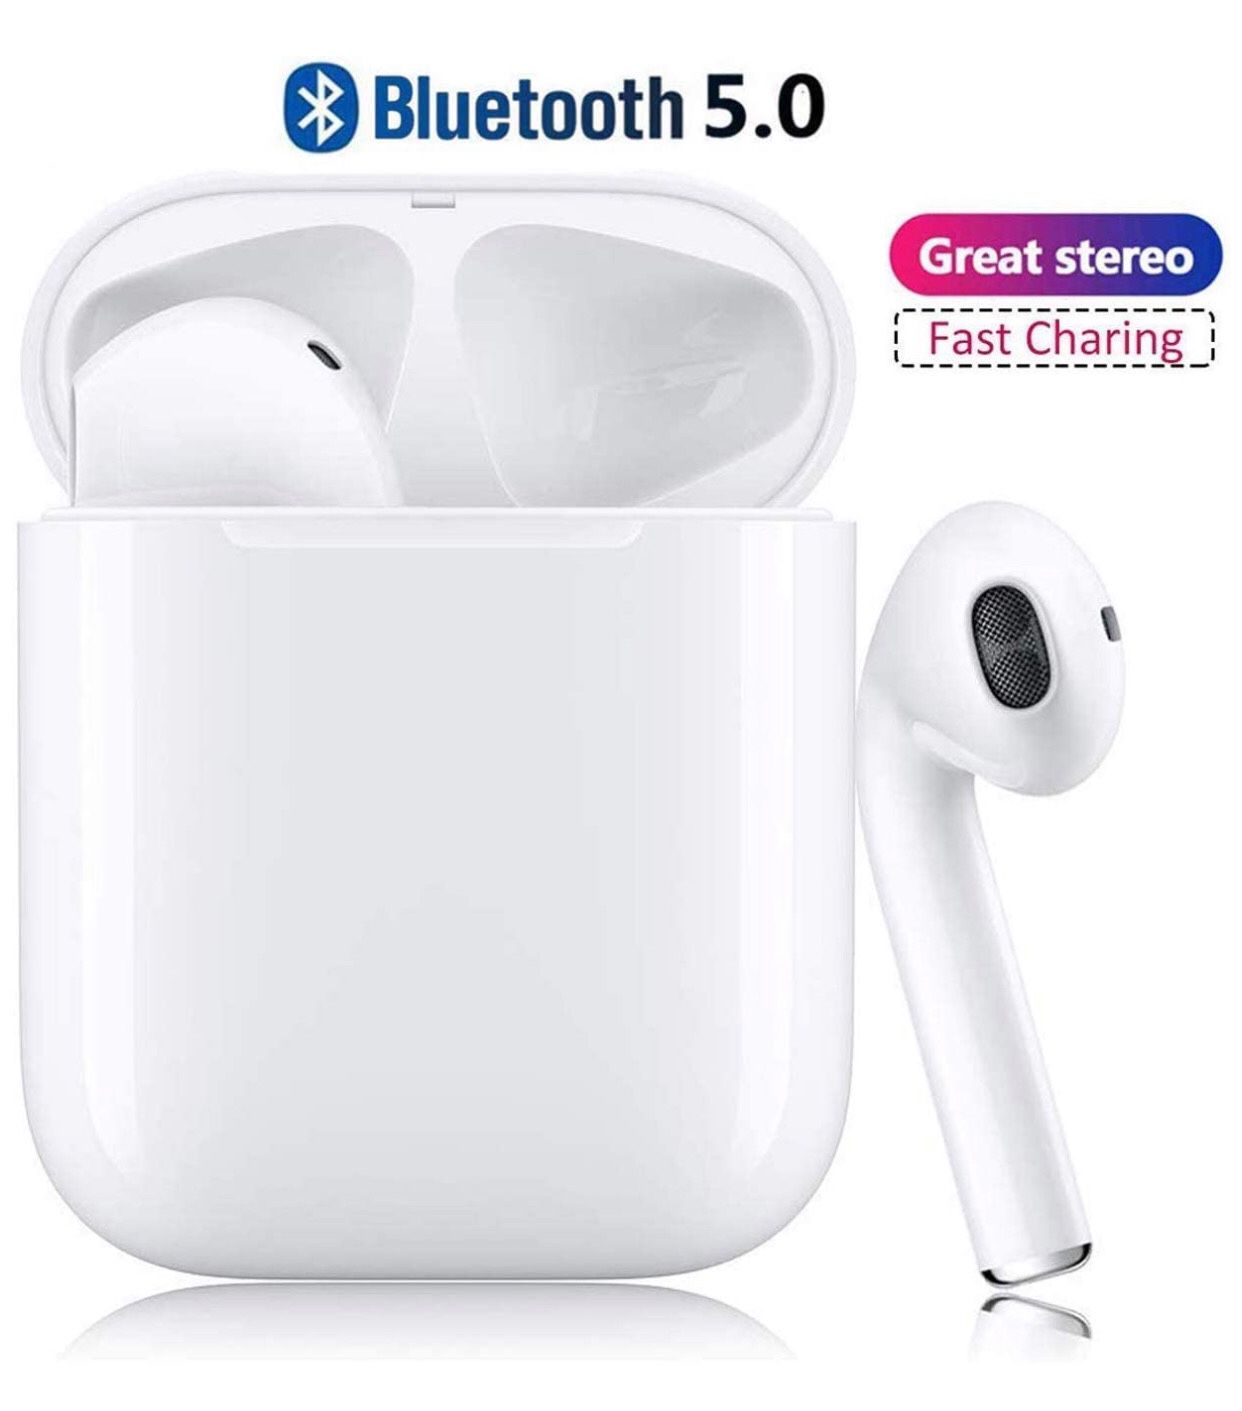 Brand new Bluetooth Wireless Earphones Headset headphones